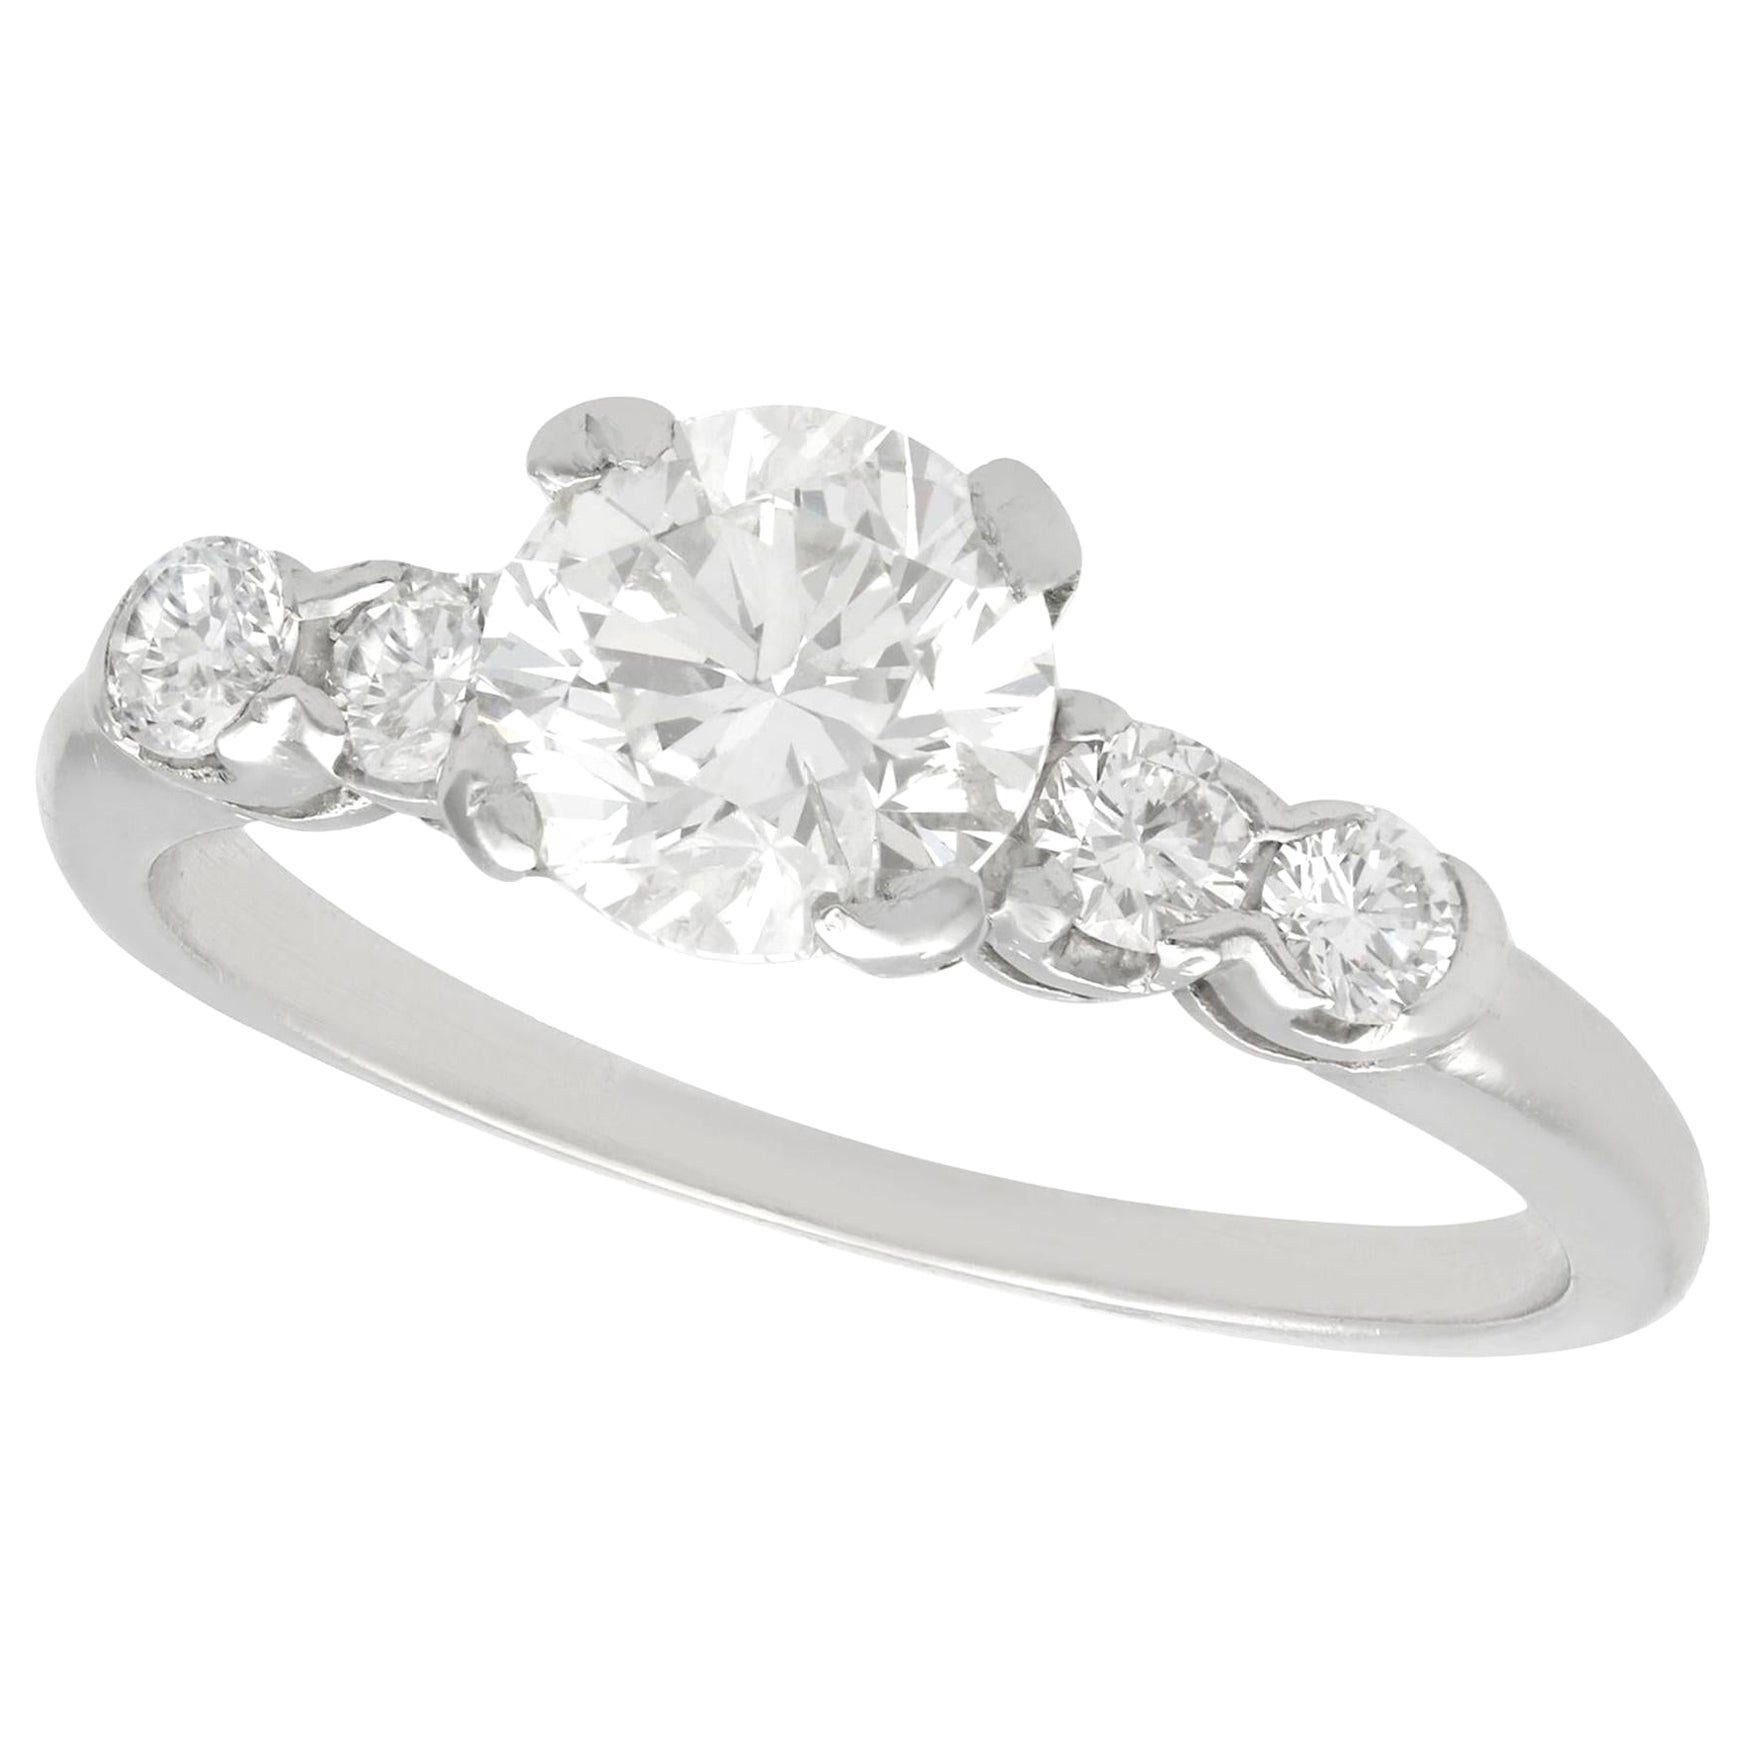 Vintage 1970s 1.21 Carat Diamond and Platinum Engagement Ring